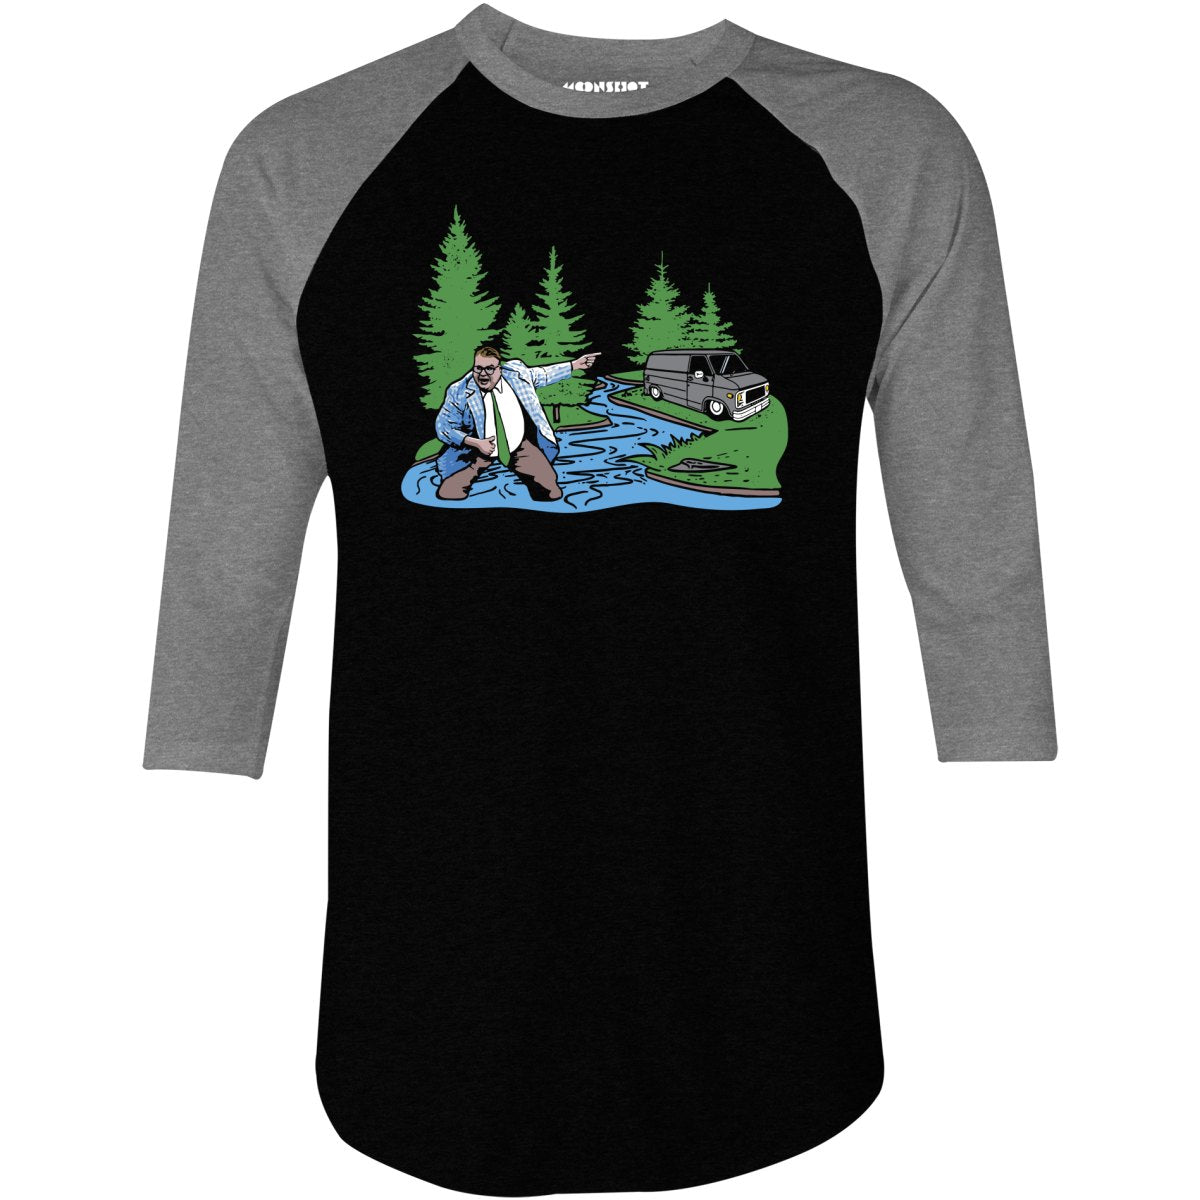 Livin' in a Van Down by The River - 3/4 Sleeve Raglan T-Shirt